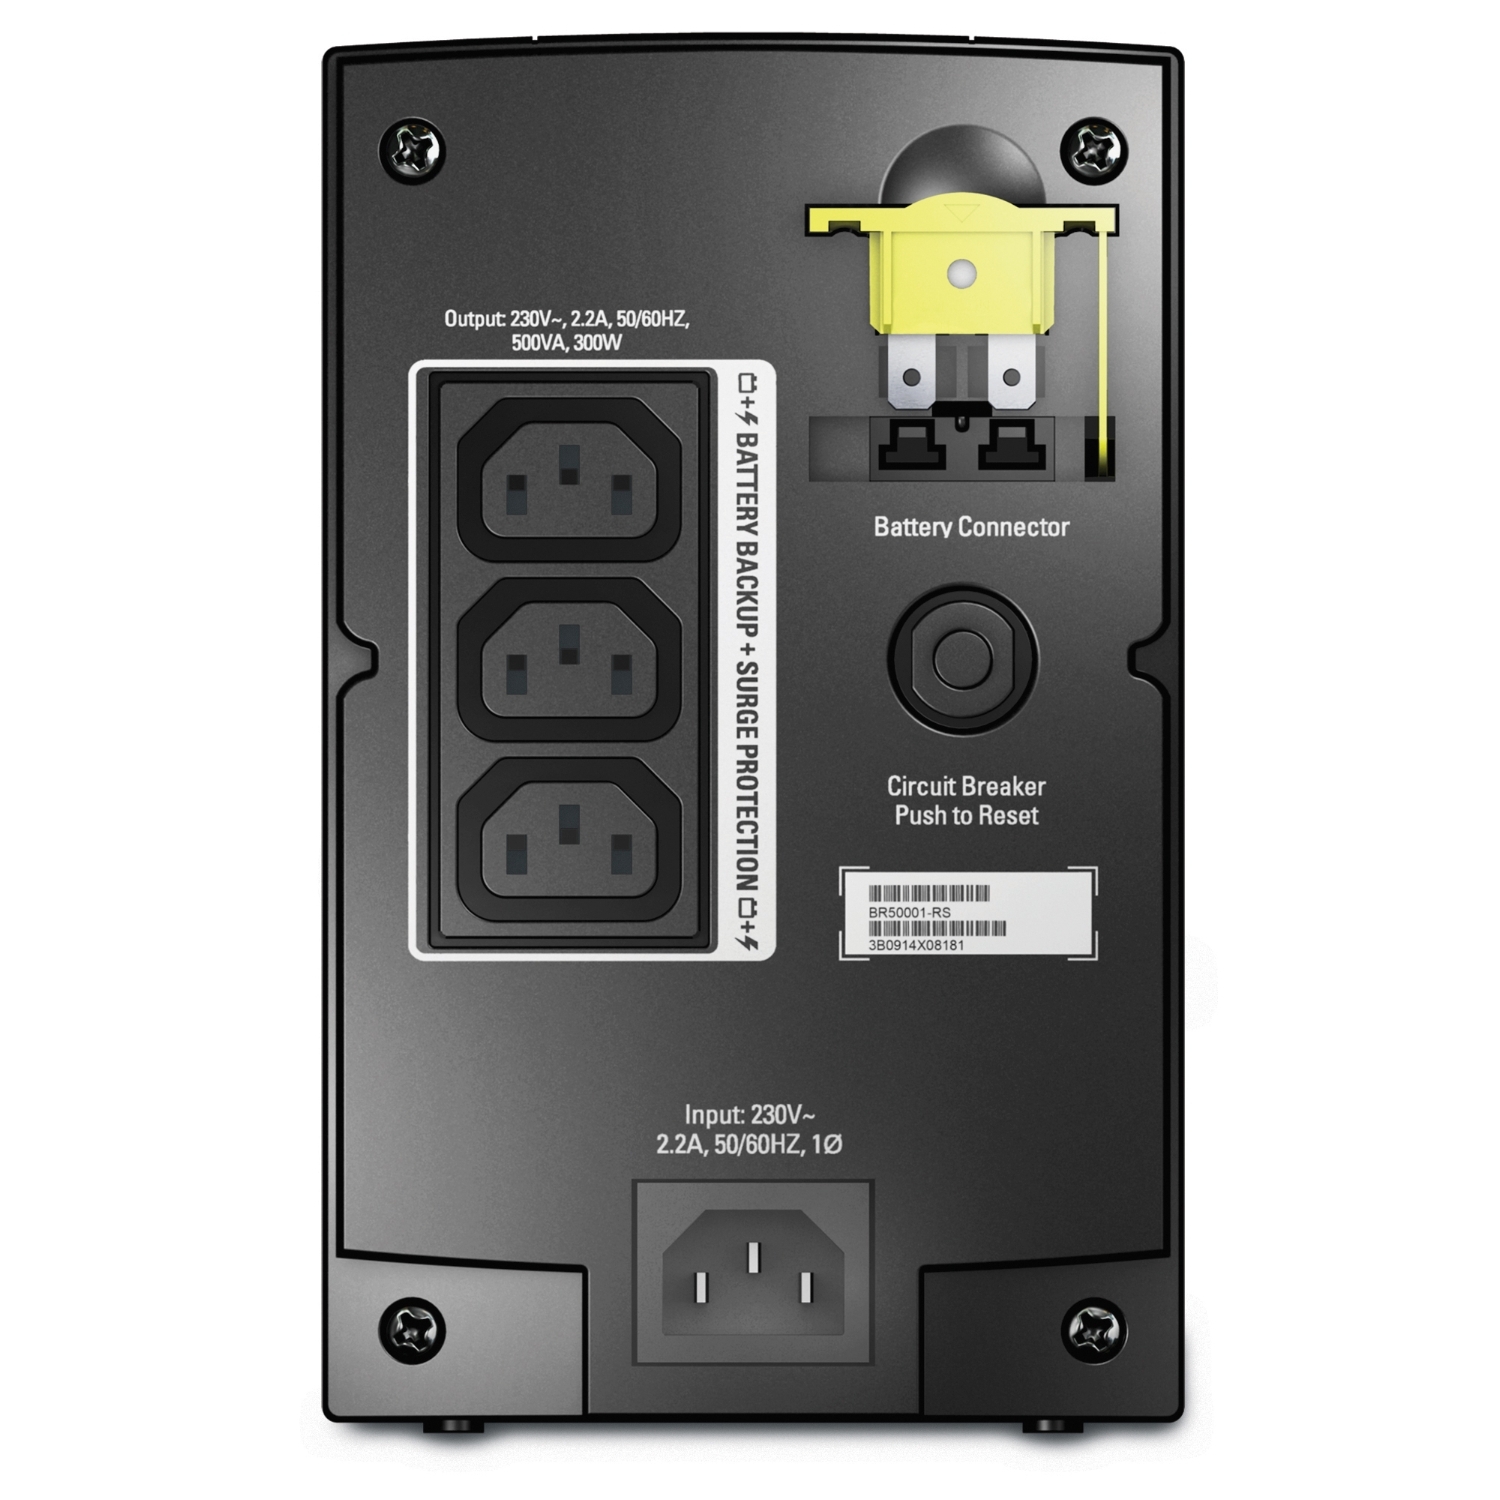 Onduleur APC Back-UPS 500VA - 300 Watts - 14 minutes d'autonomie